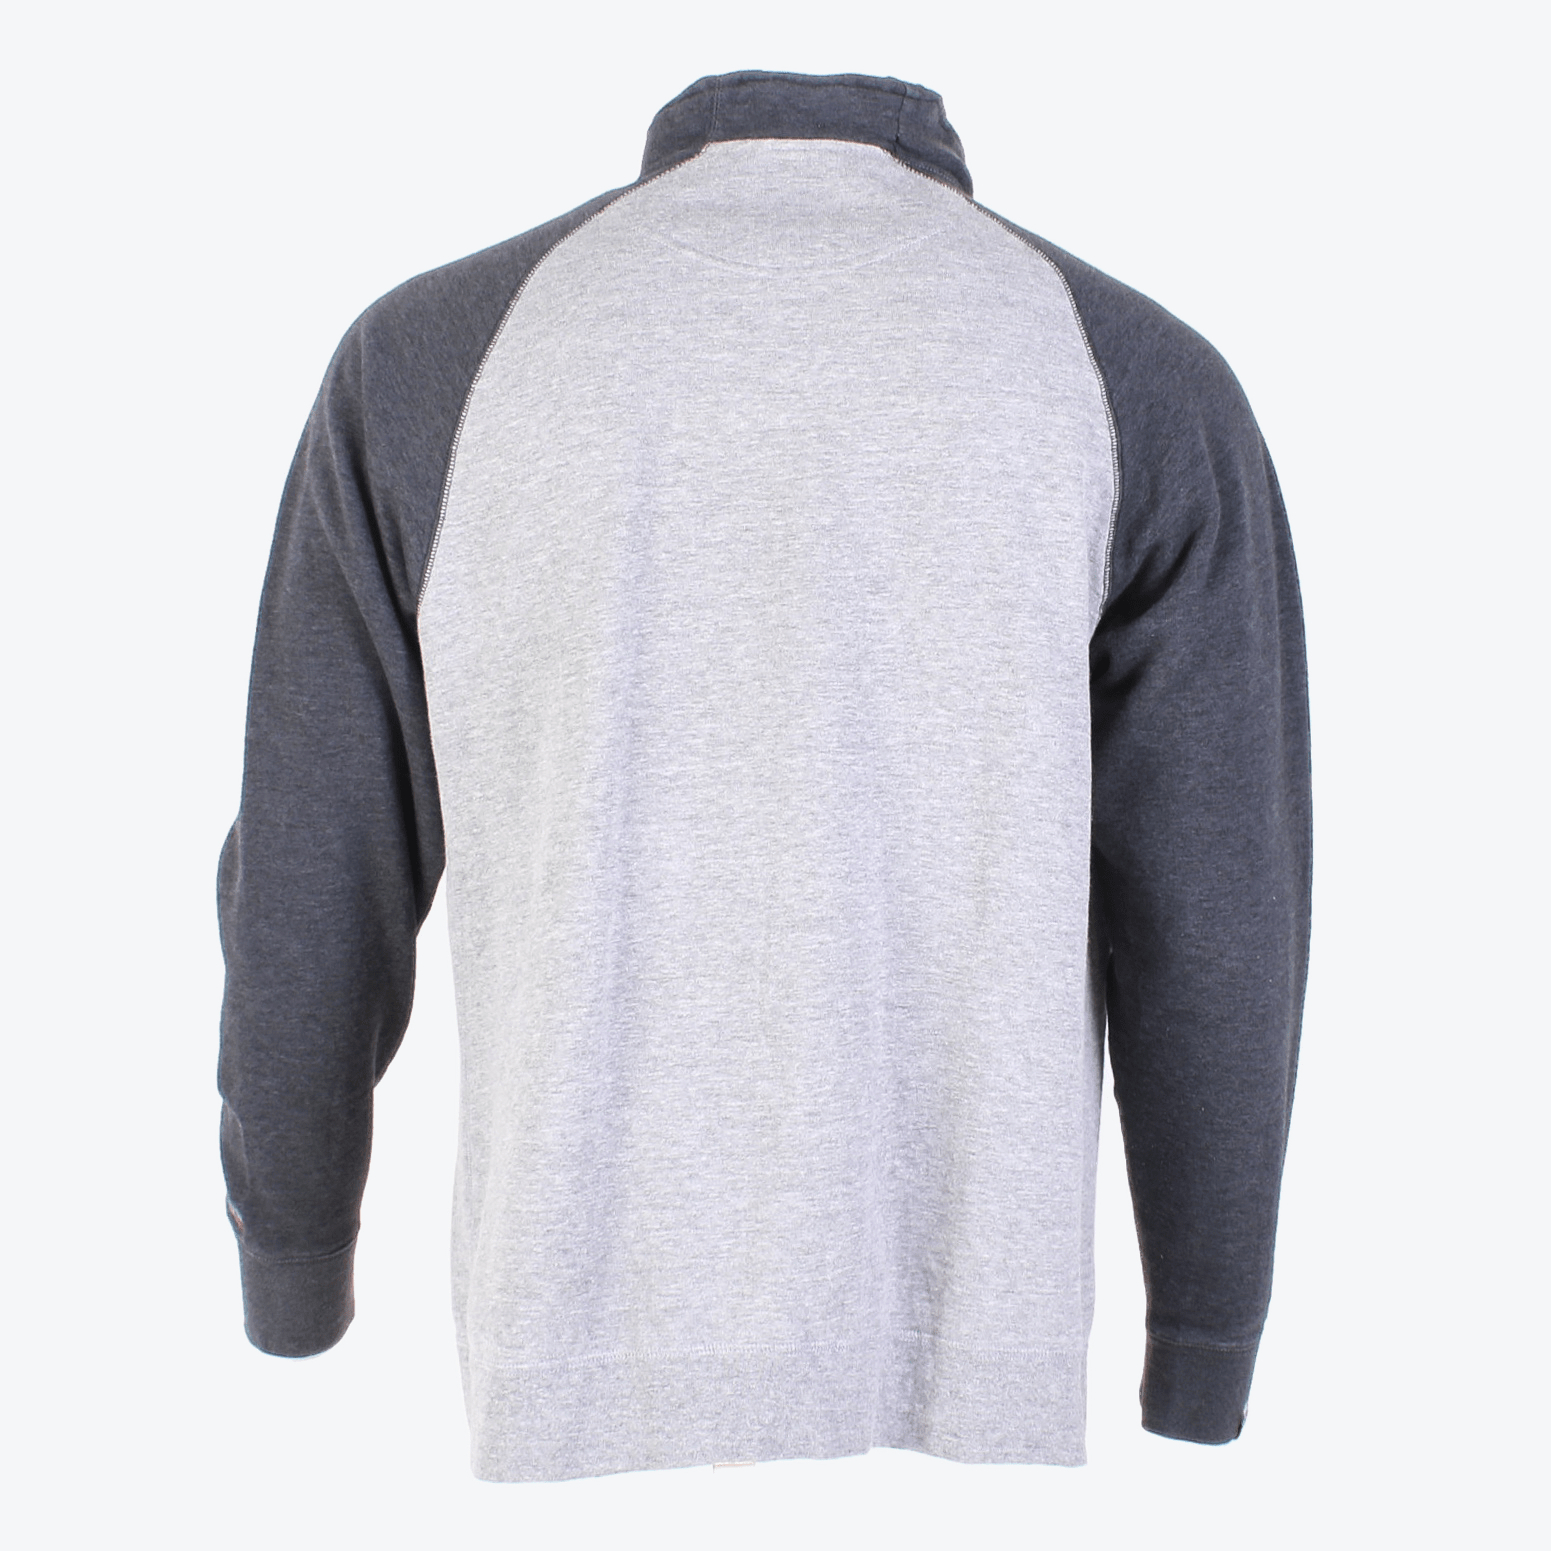 Vintage Zipped Sweatshirt - Grey - American Madness